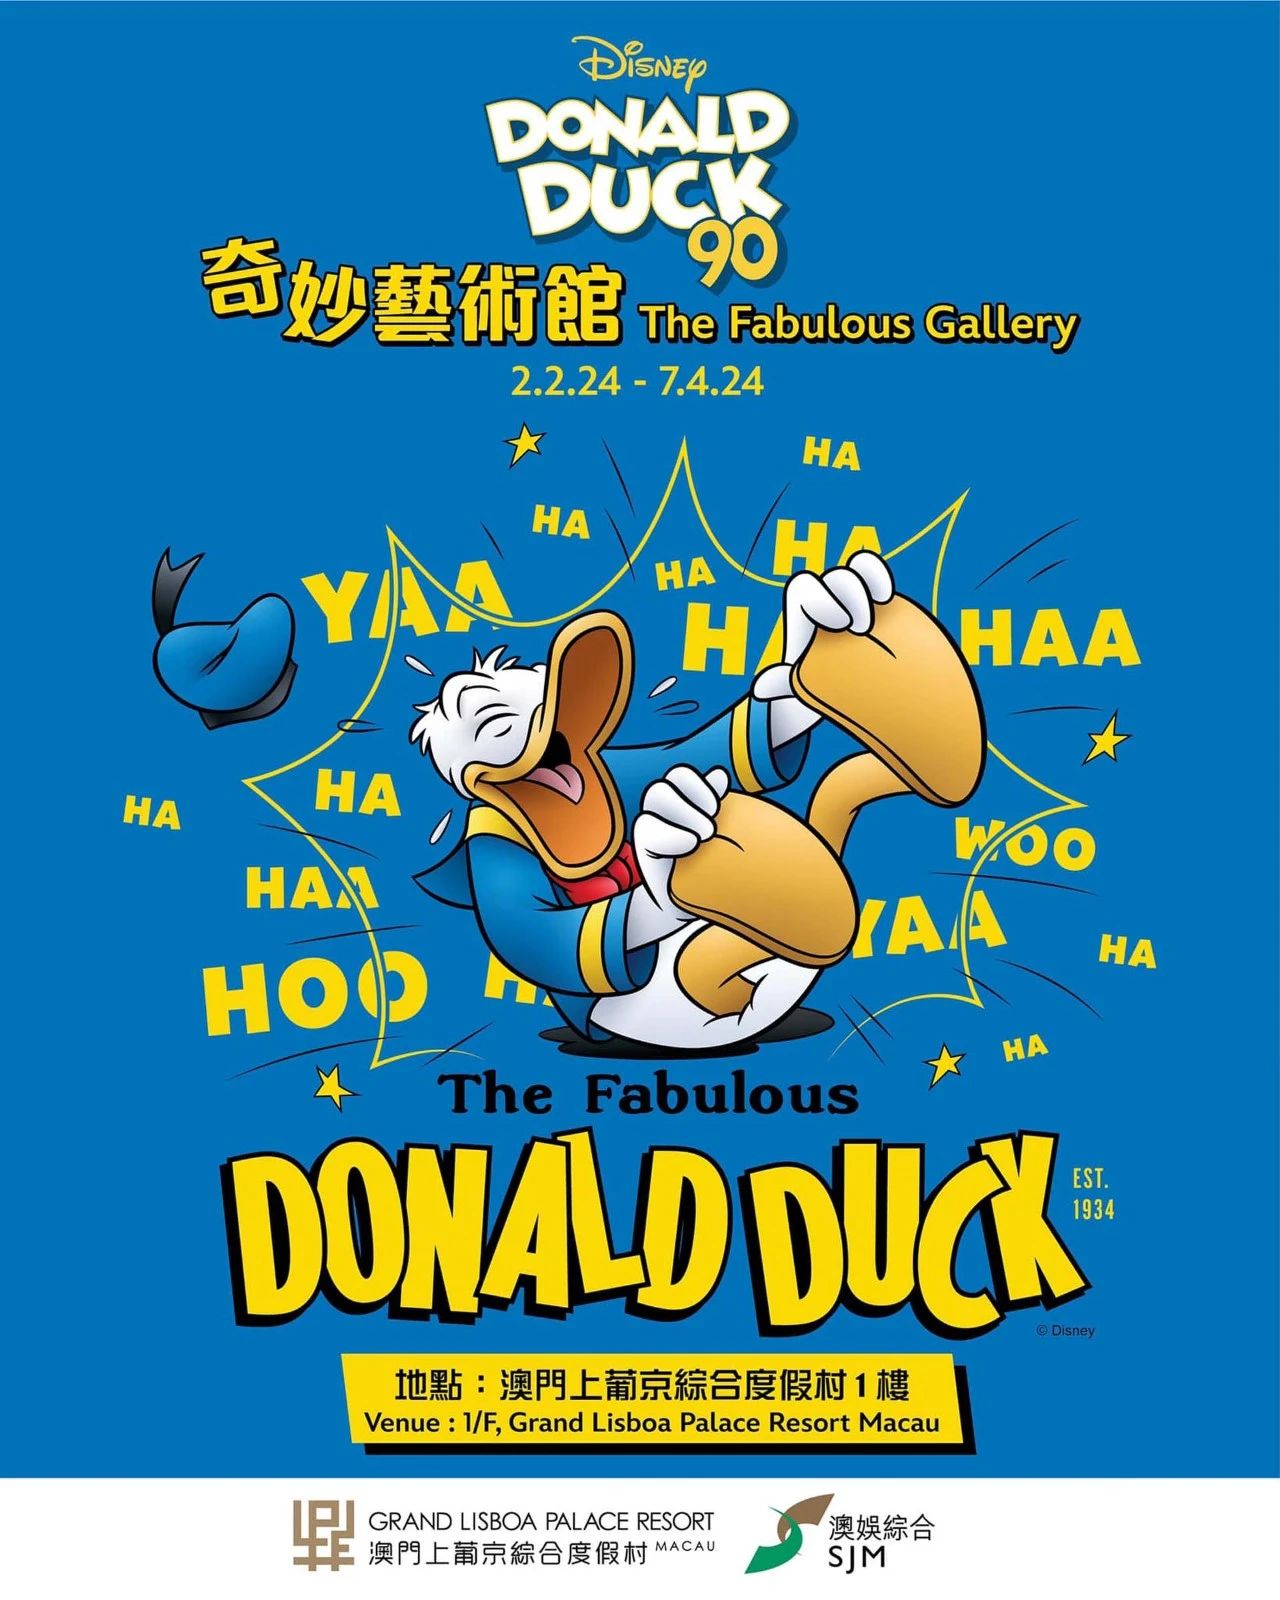 Donald-Duck-90.jpg